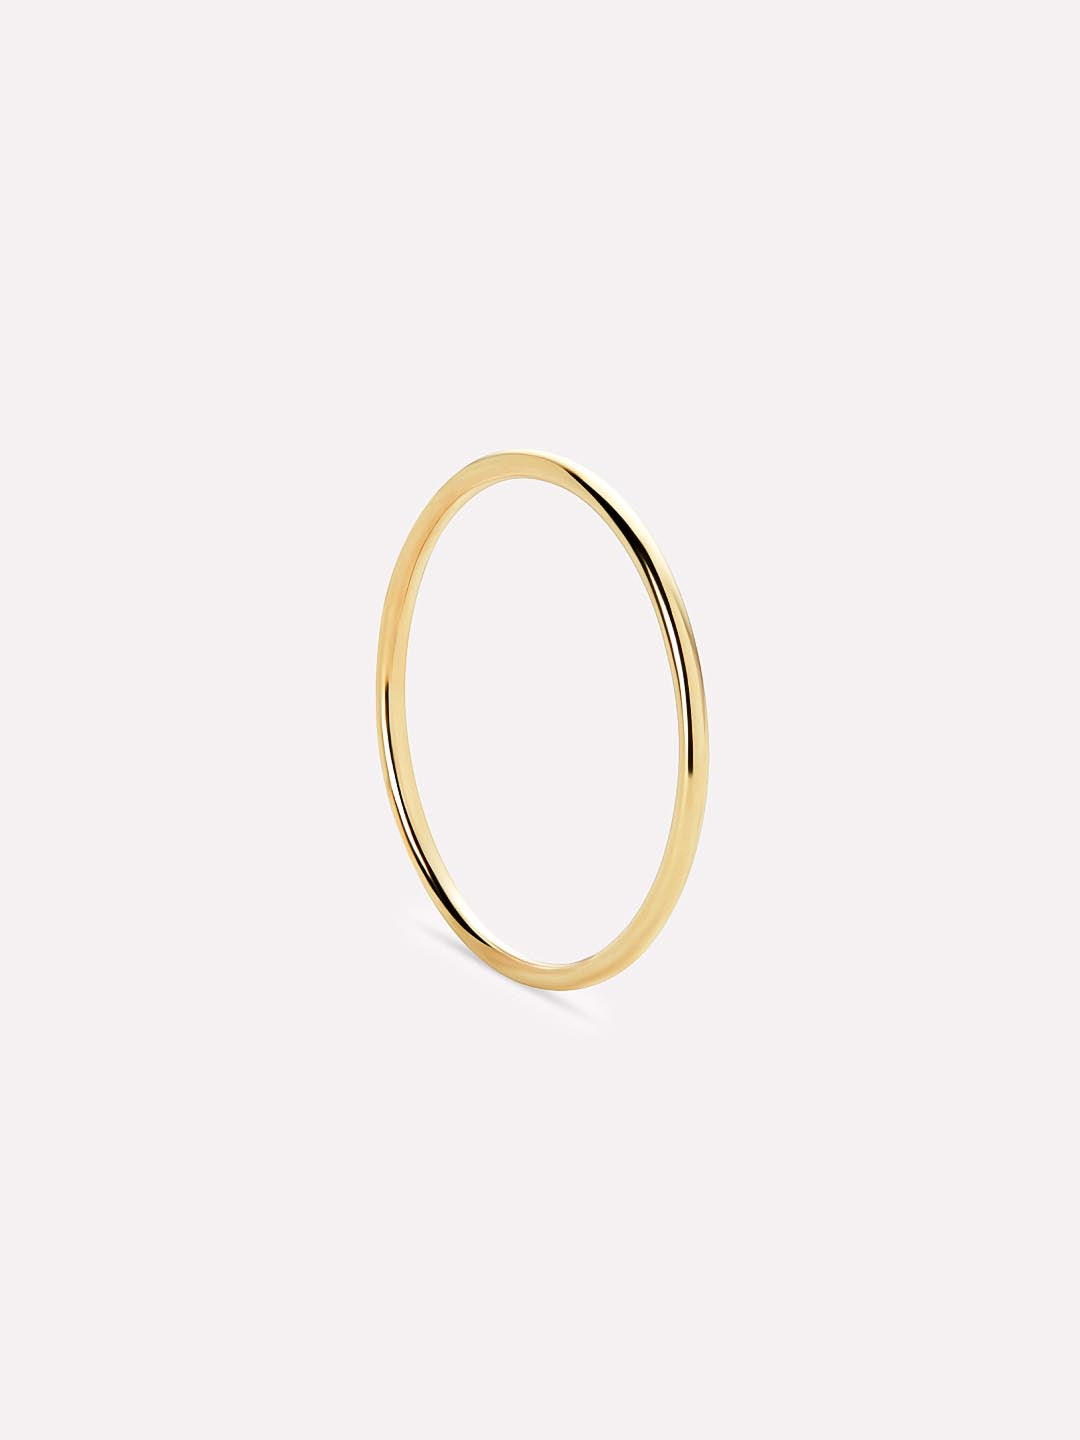 Best Chunky Gold Jewelry to Wear 2022 - Trendy Gold Necklaces, Bracelets,  Earrings, Rings